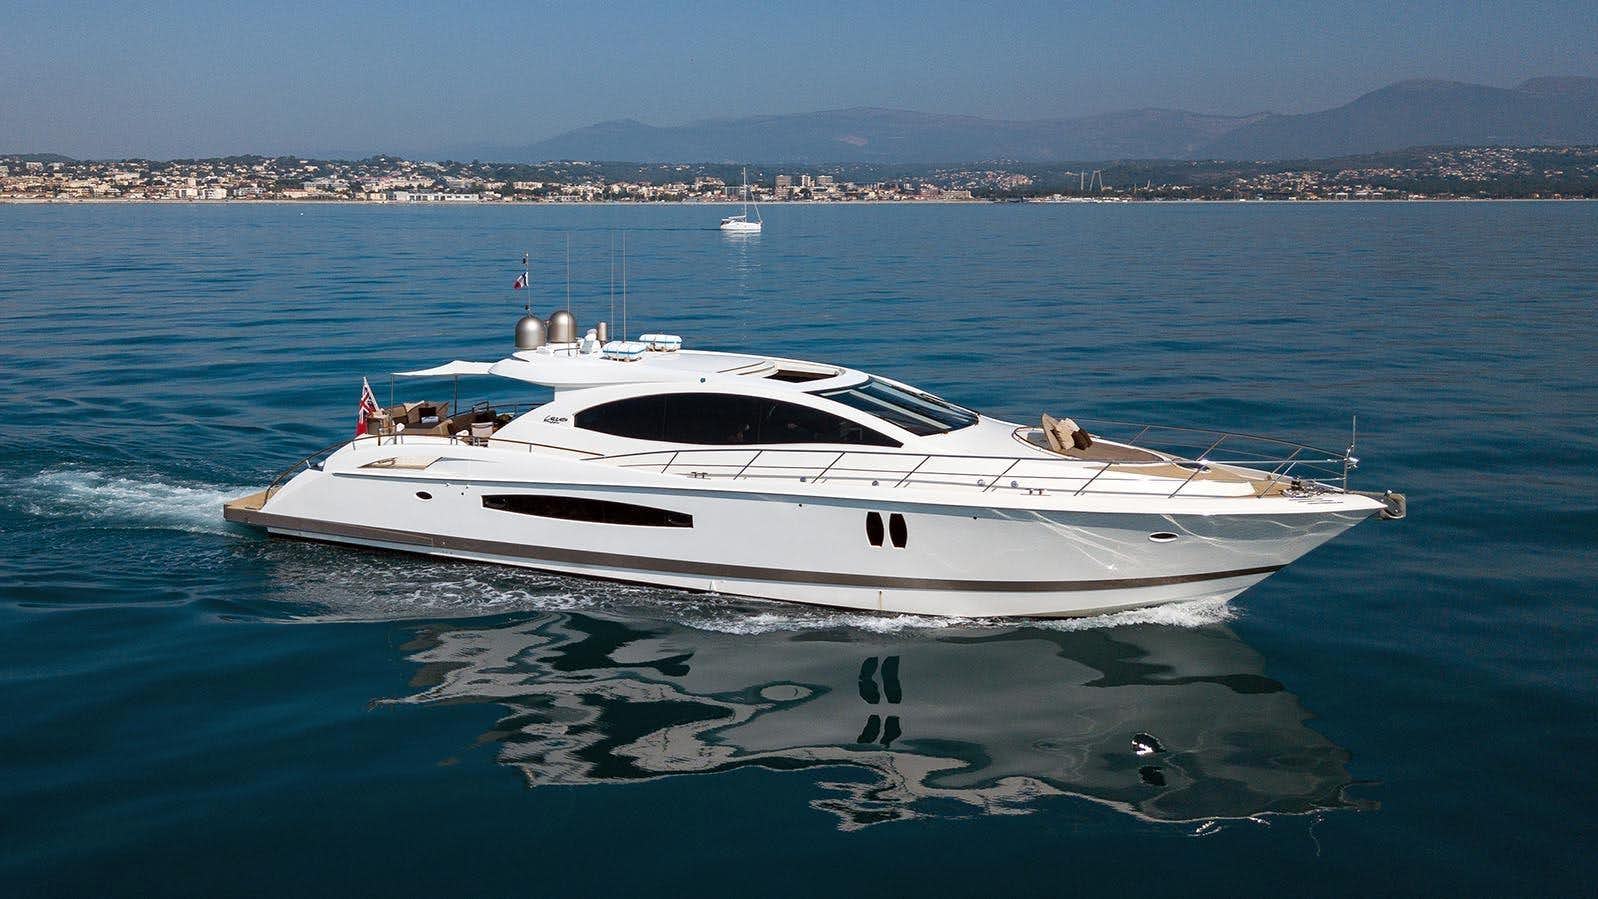 2008 lazzara lsx 75
Yacht for Sale